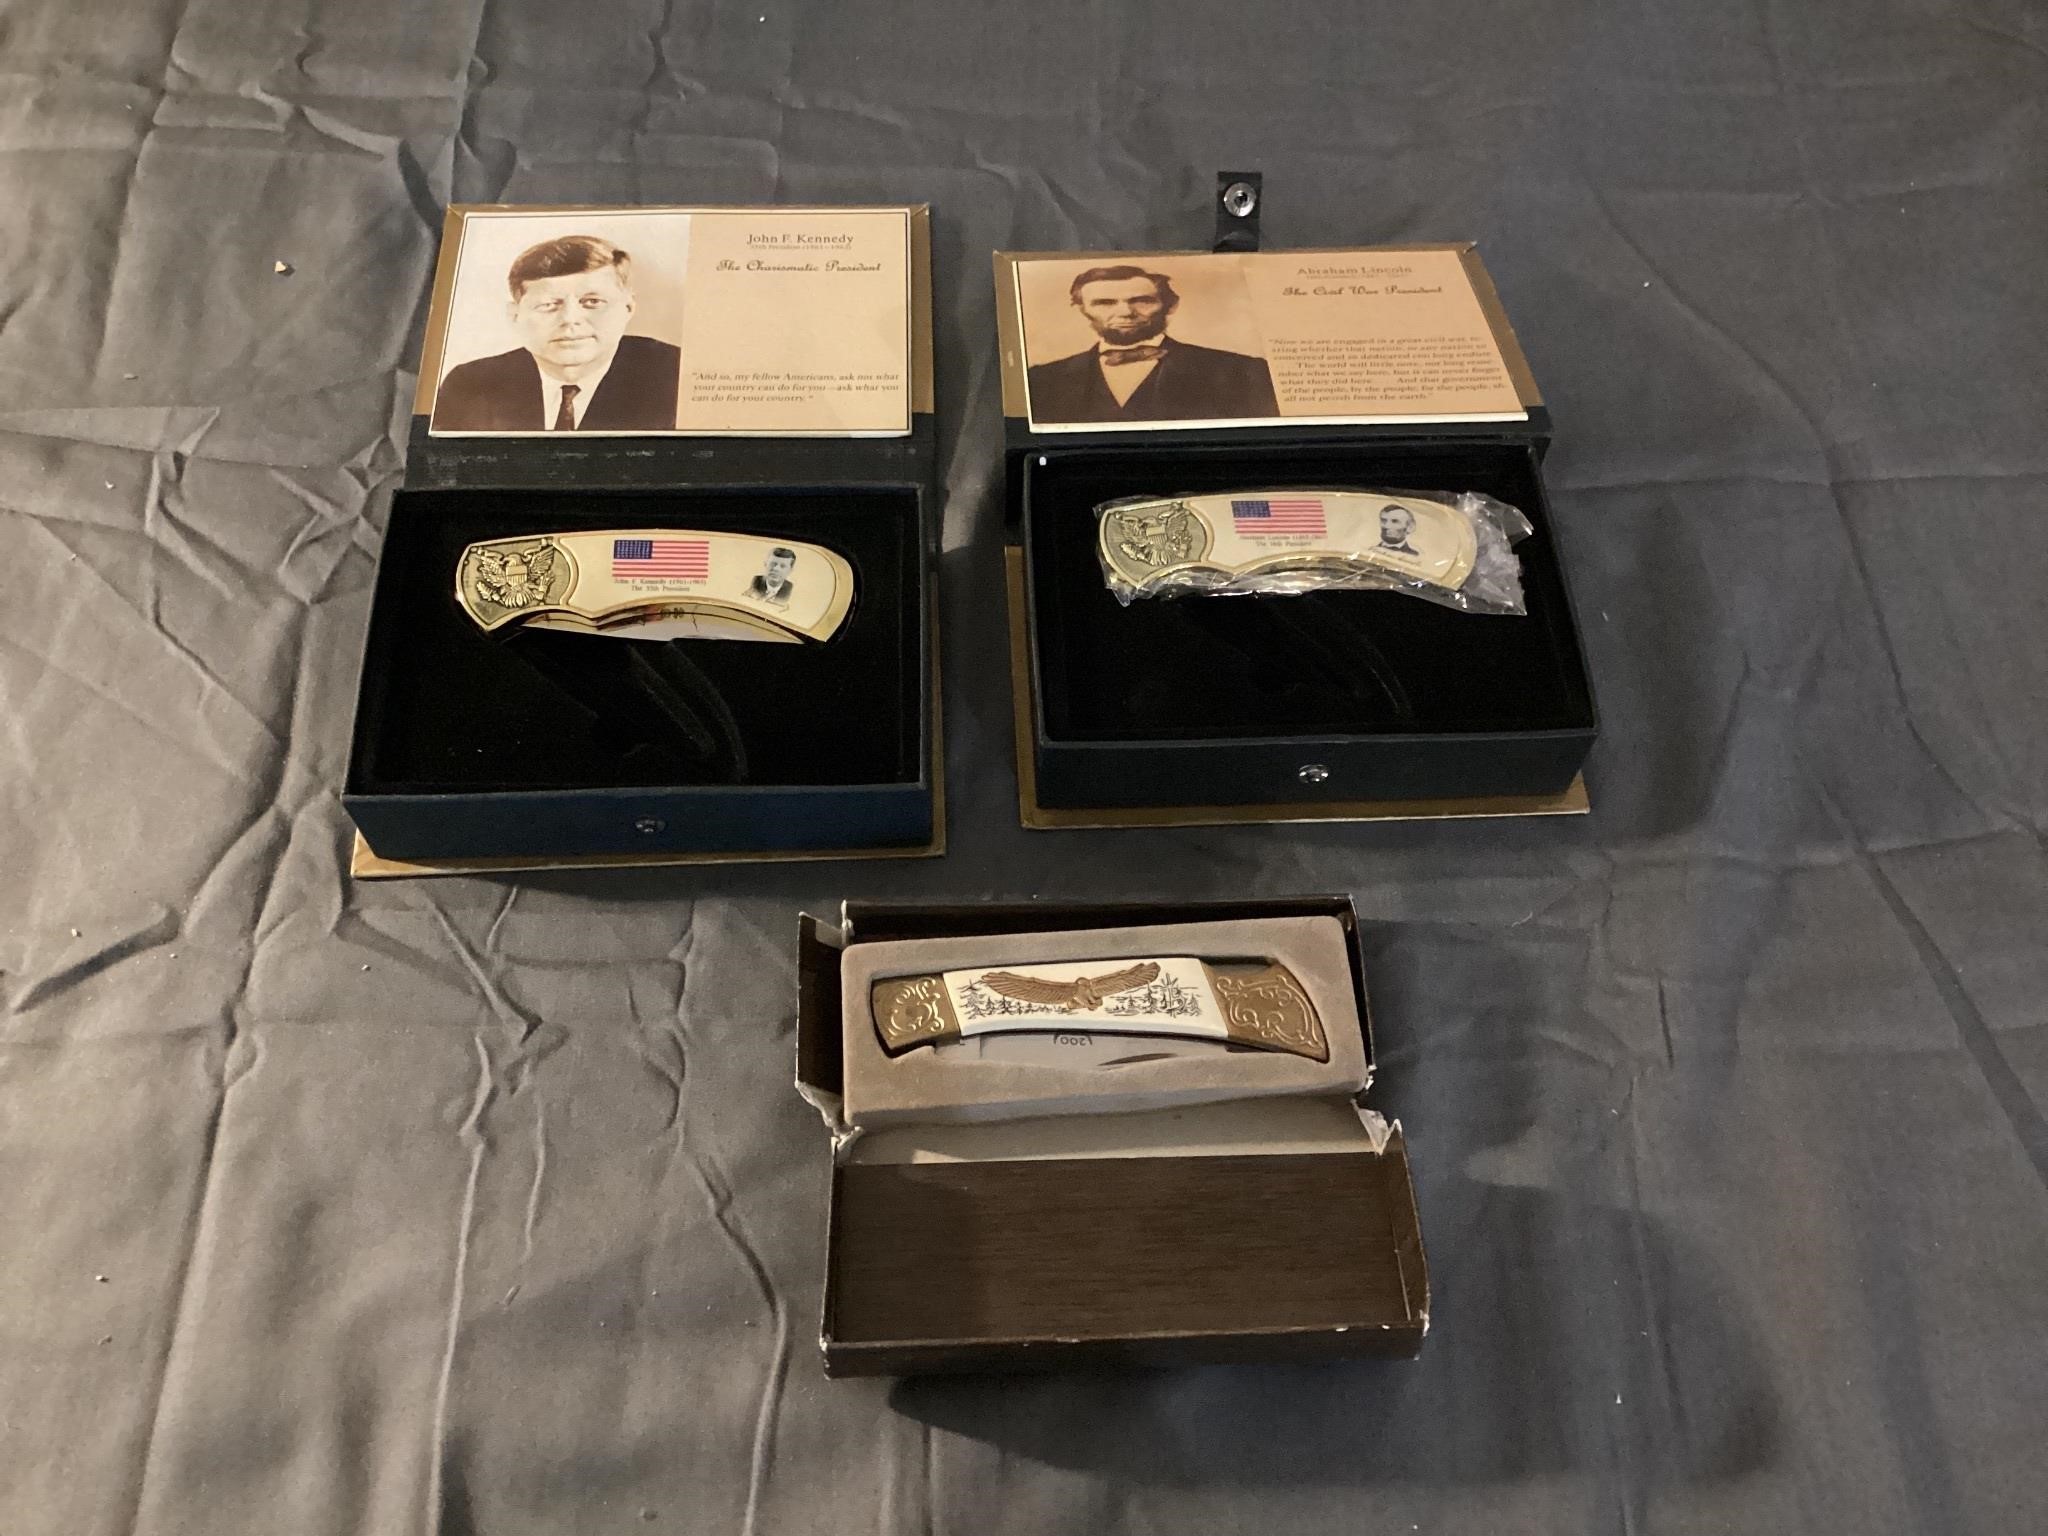 John Kennedy, Abraham Lincoln knives